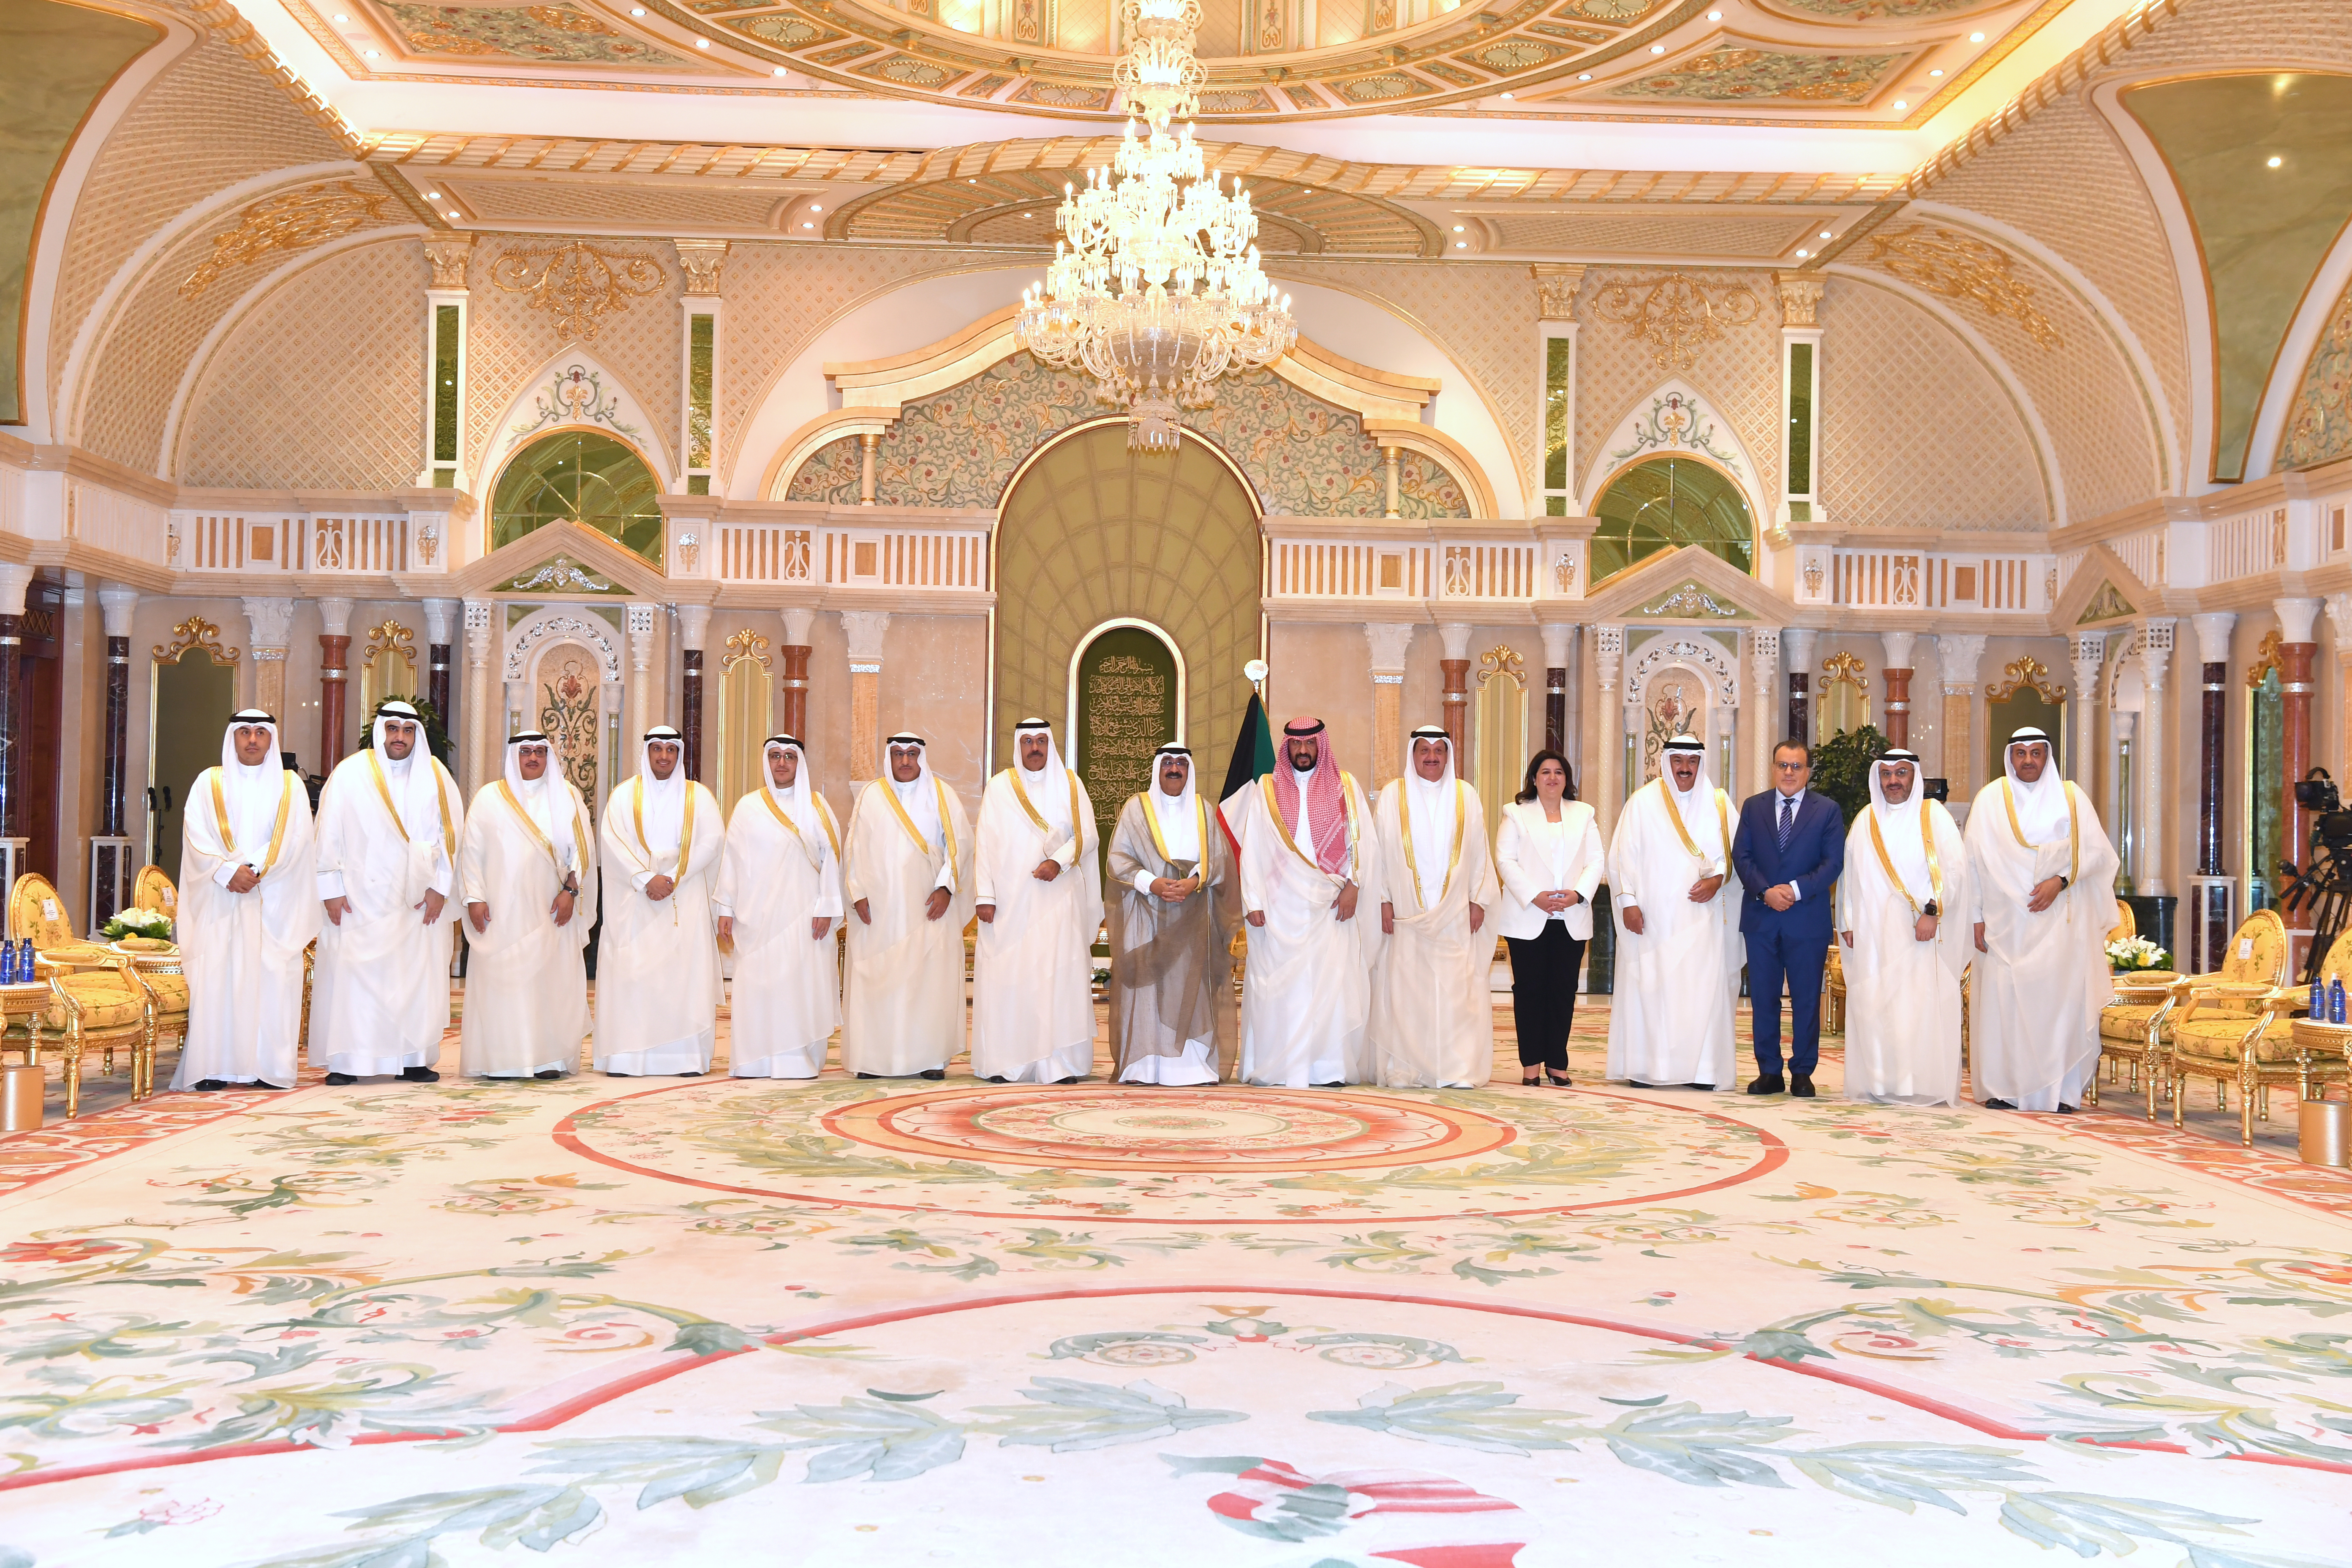 KUWAIT: His Highness the Crown Prince Sheikh Mishal Al-Ahmad Al-Jaber Al-Sabah receives the new Cabinet's members. -- Amiri Diwan photo